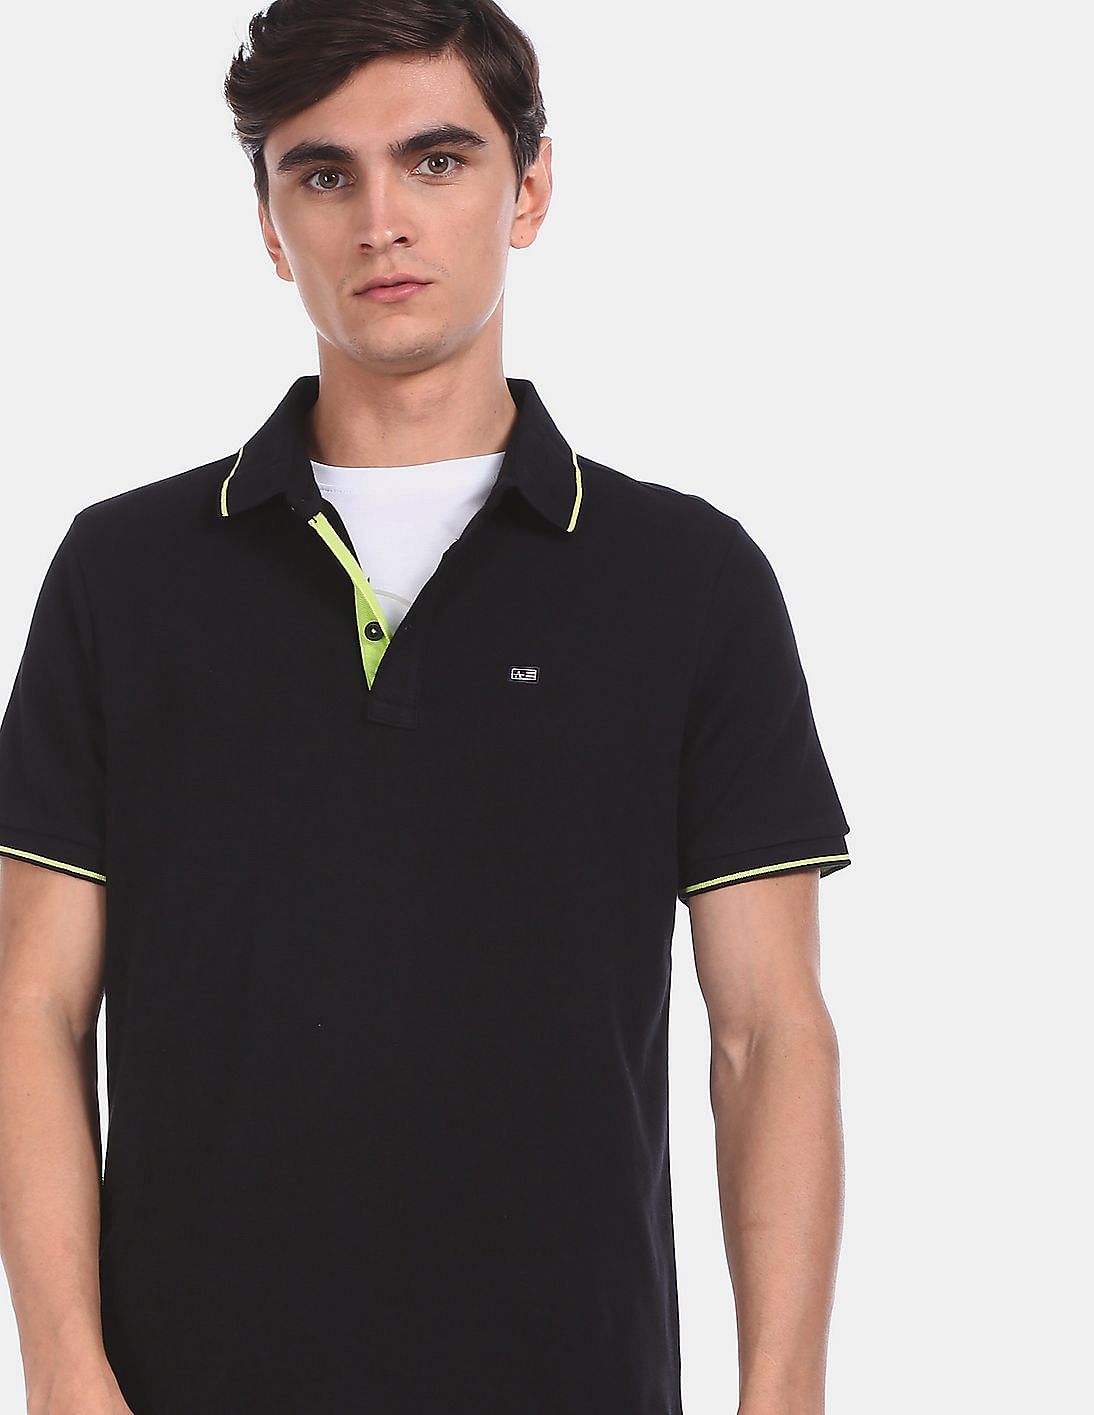 Buy Arrow Sports Short Sleeve Cotton Solid Polo Shirt - NNNOW.com